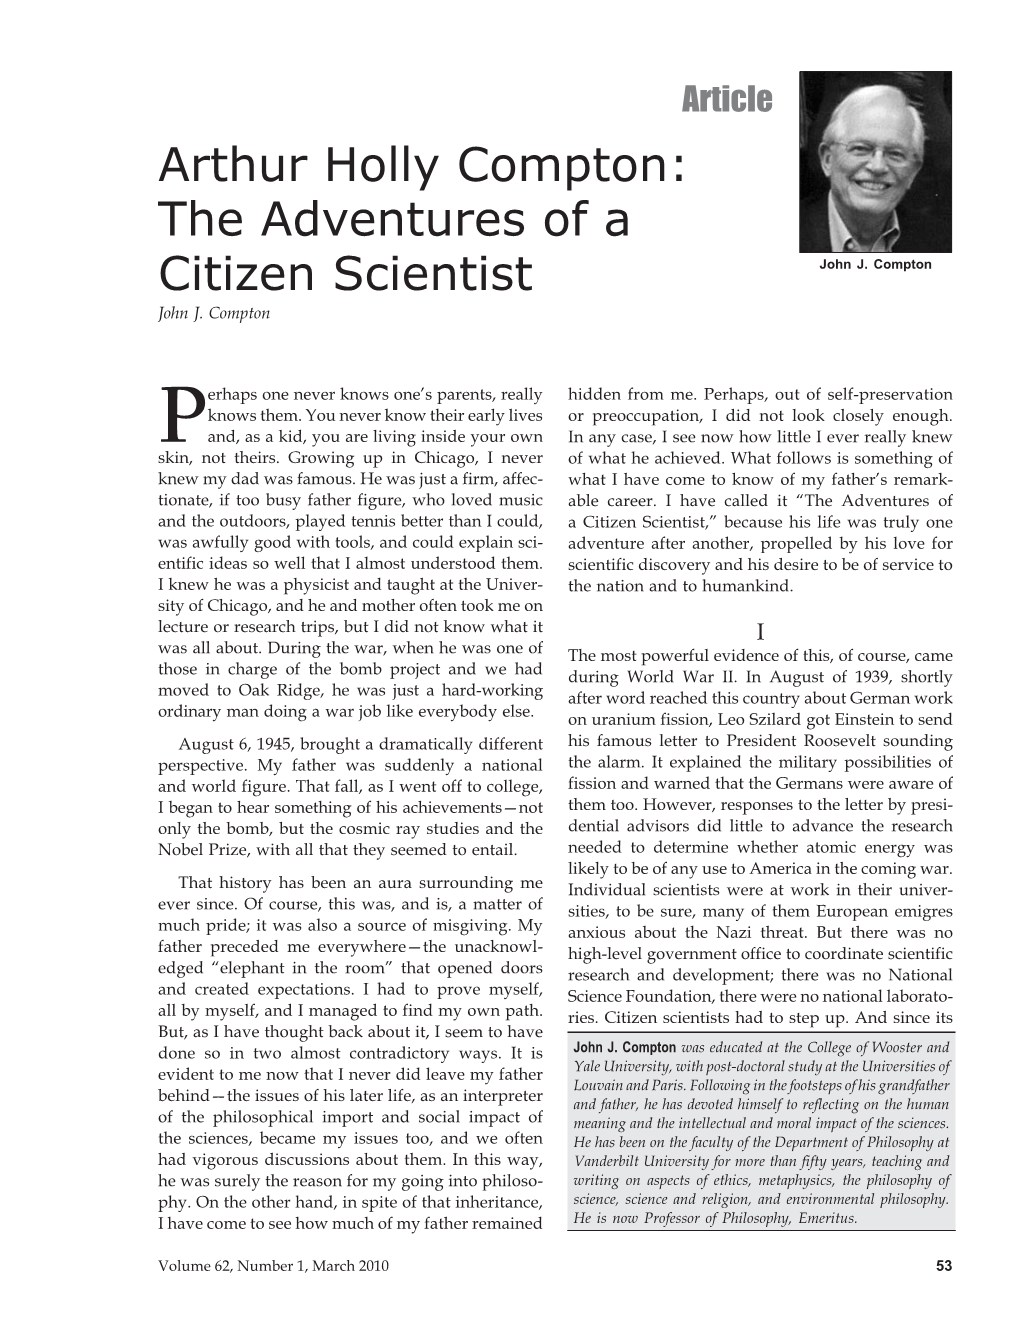 Arthur Holly Compton: the Adventures of a Citizen Scientist John J